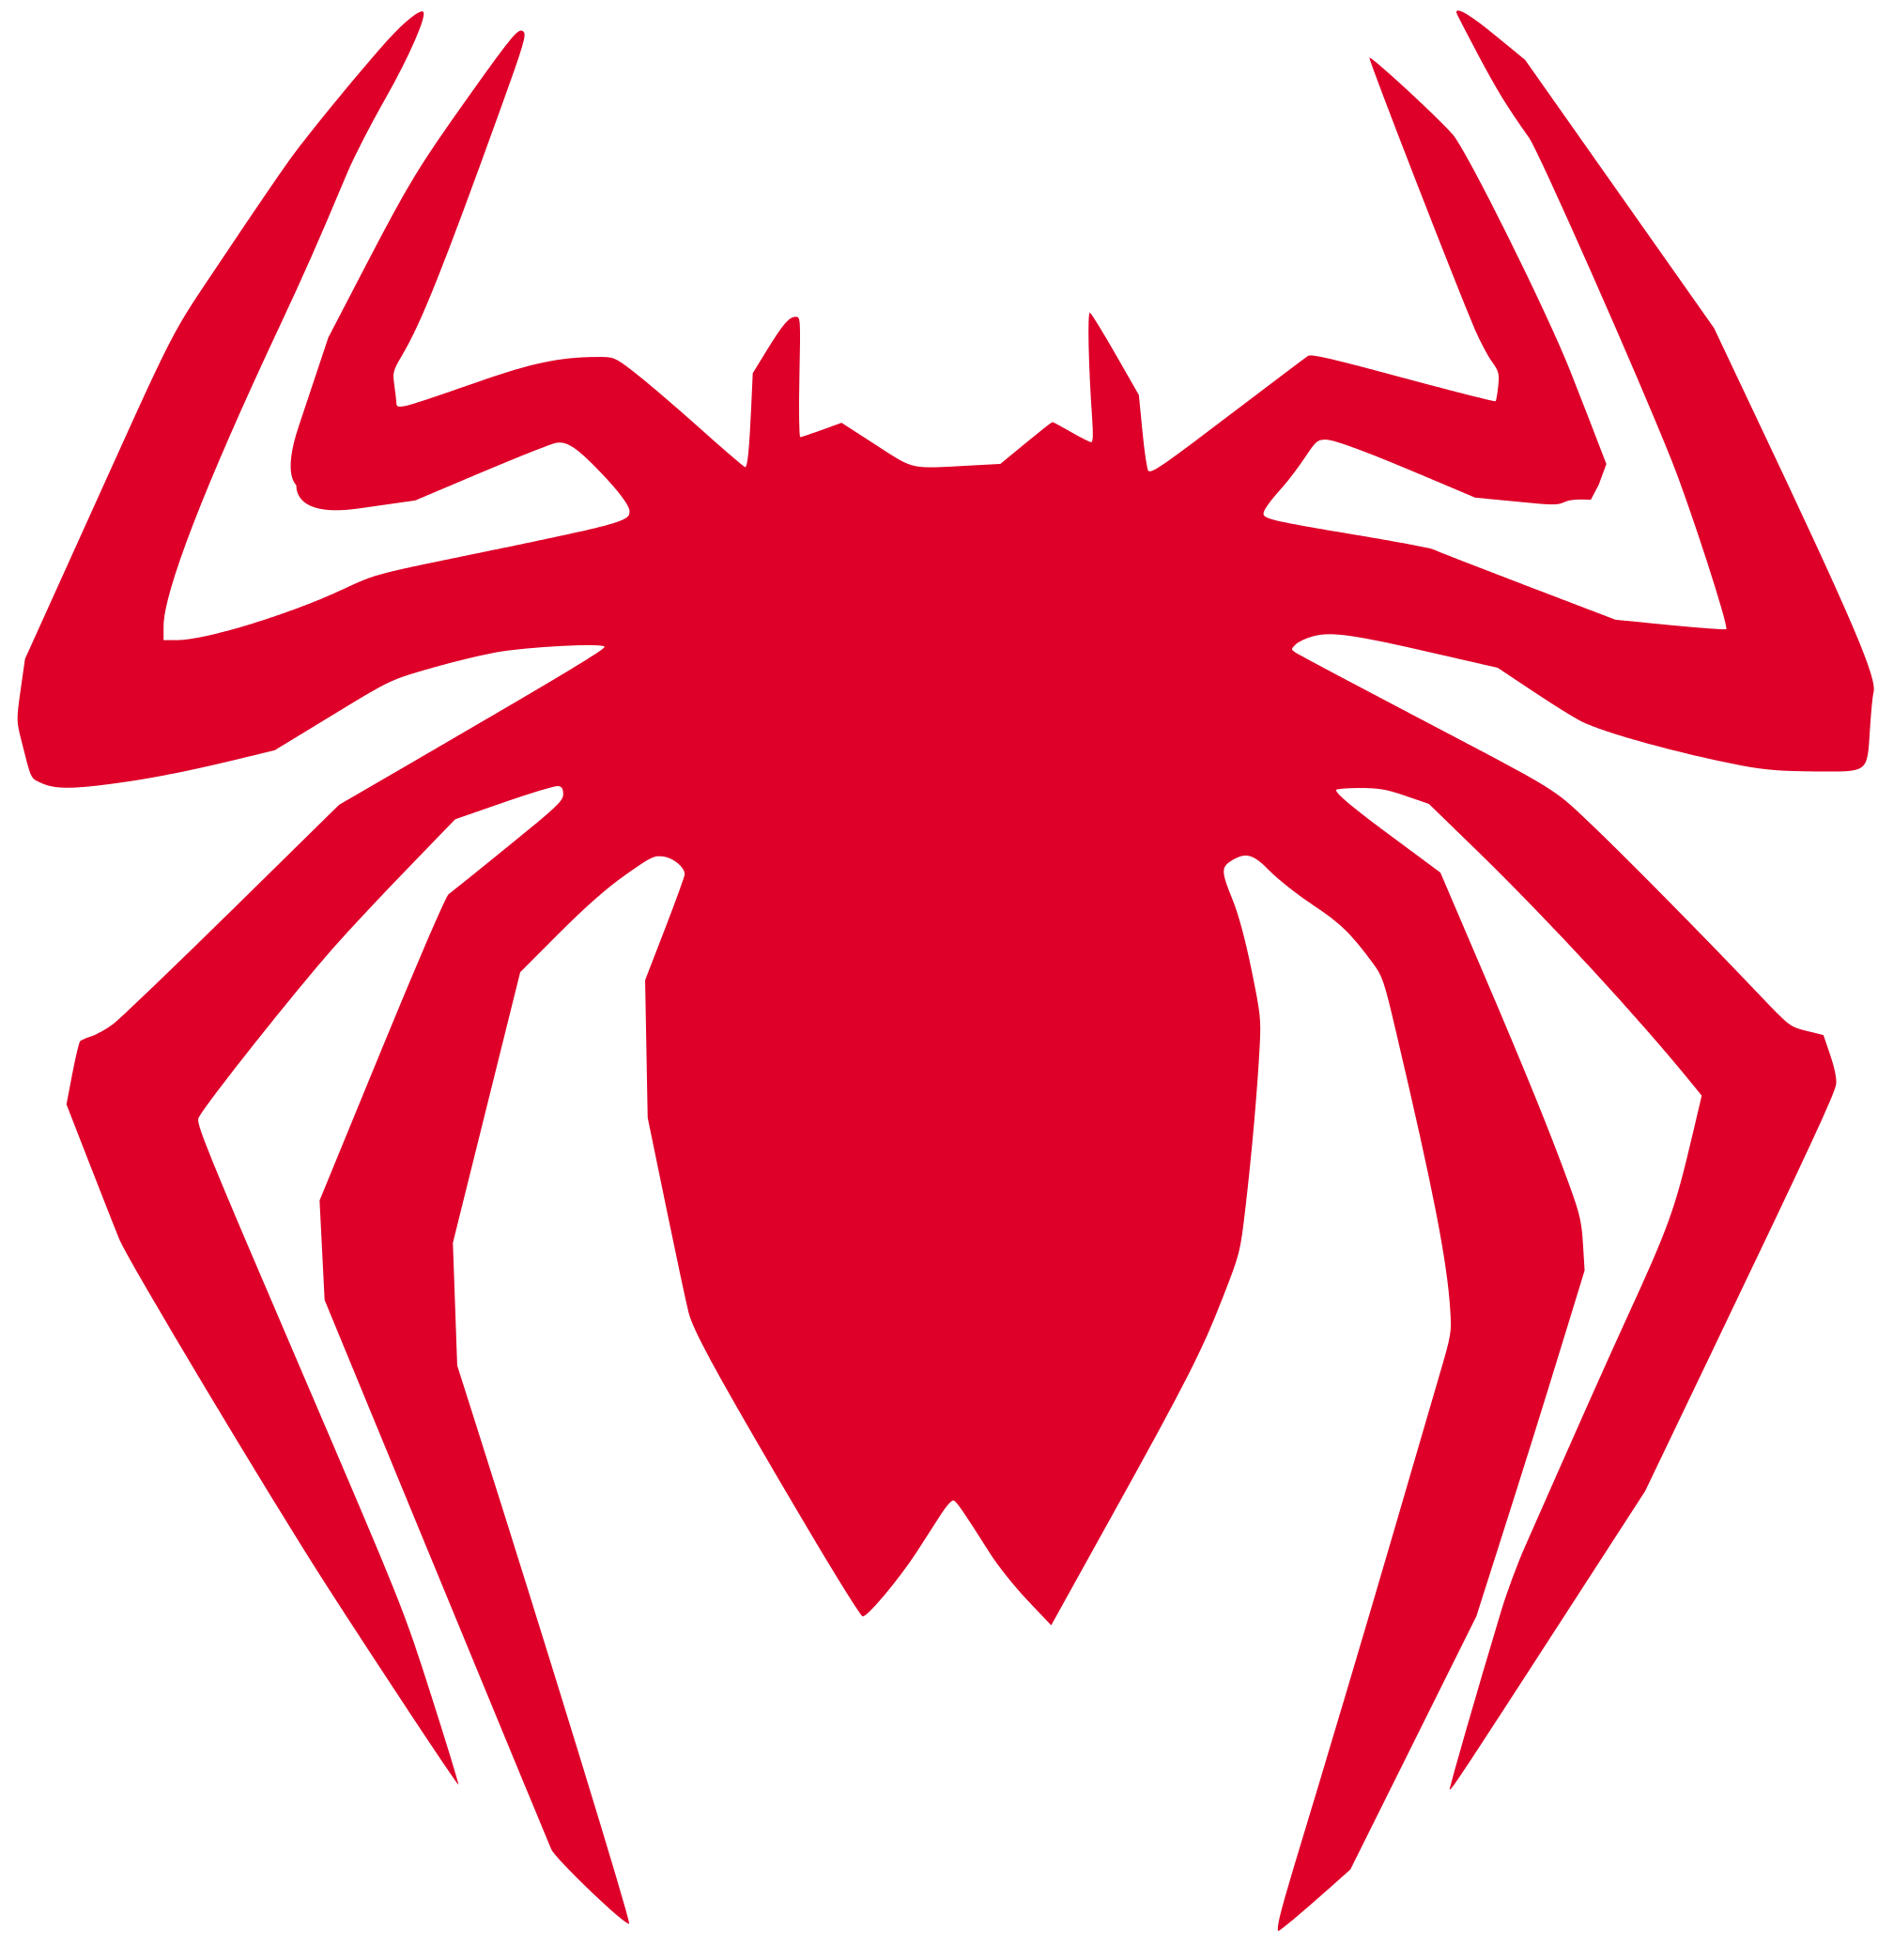 Spider Man Homecoming Film Series Logo Png Download 2000.